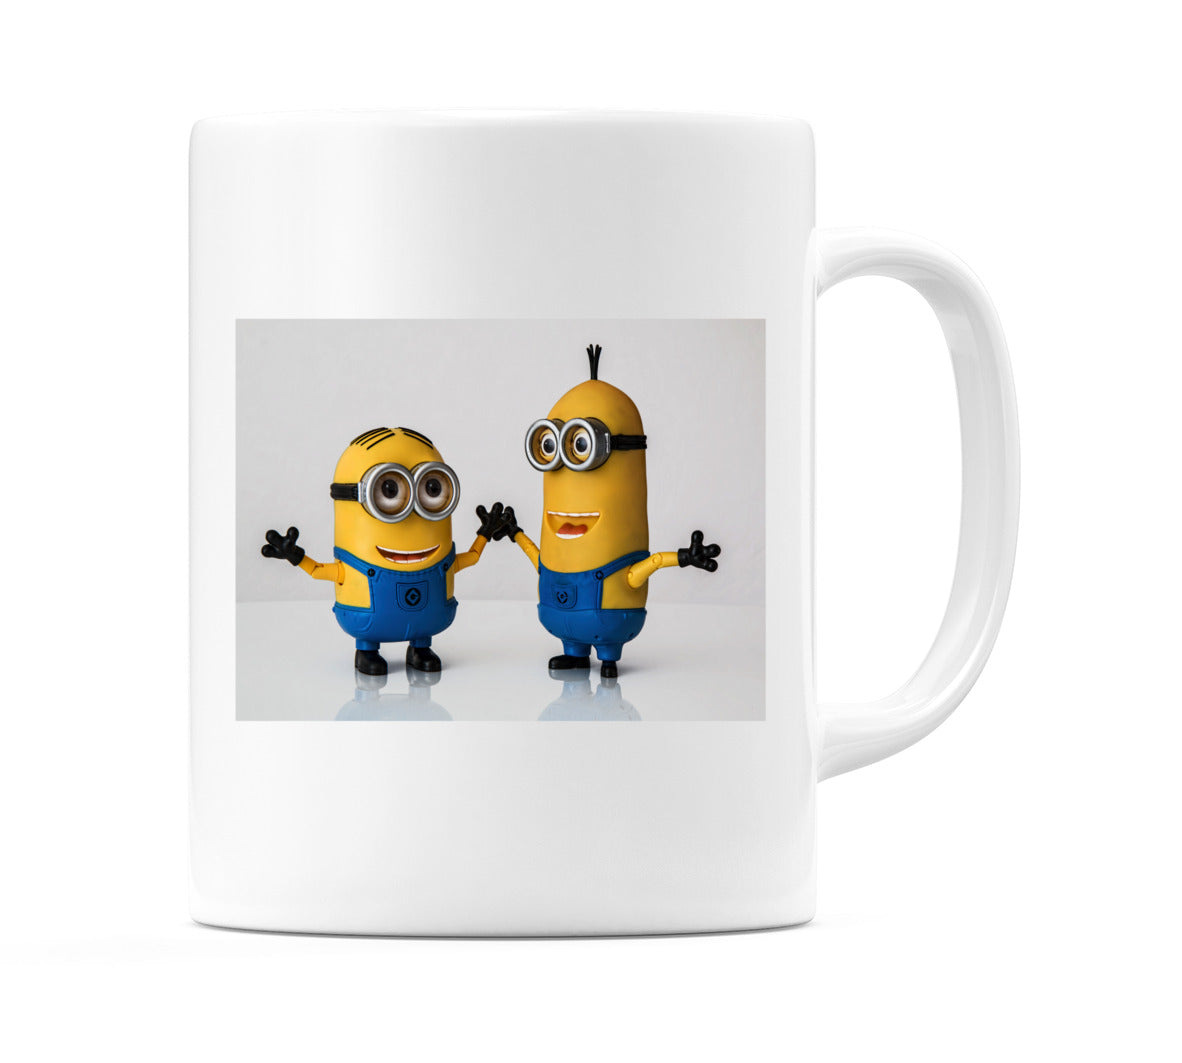 Minions Mug